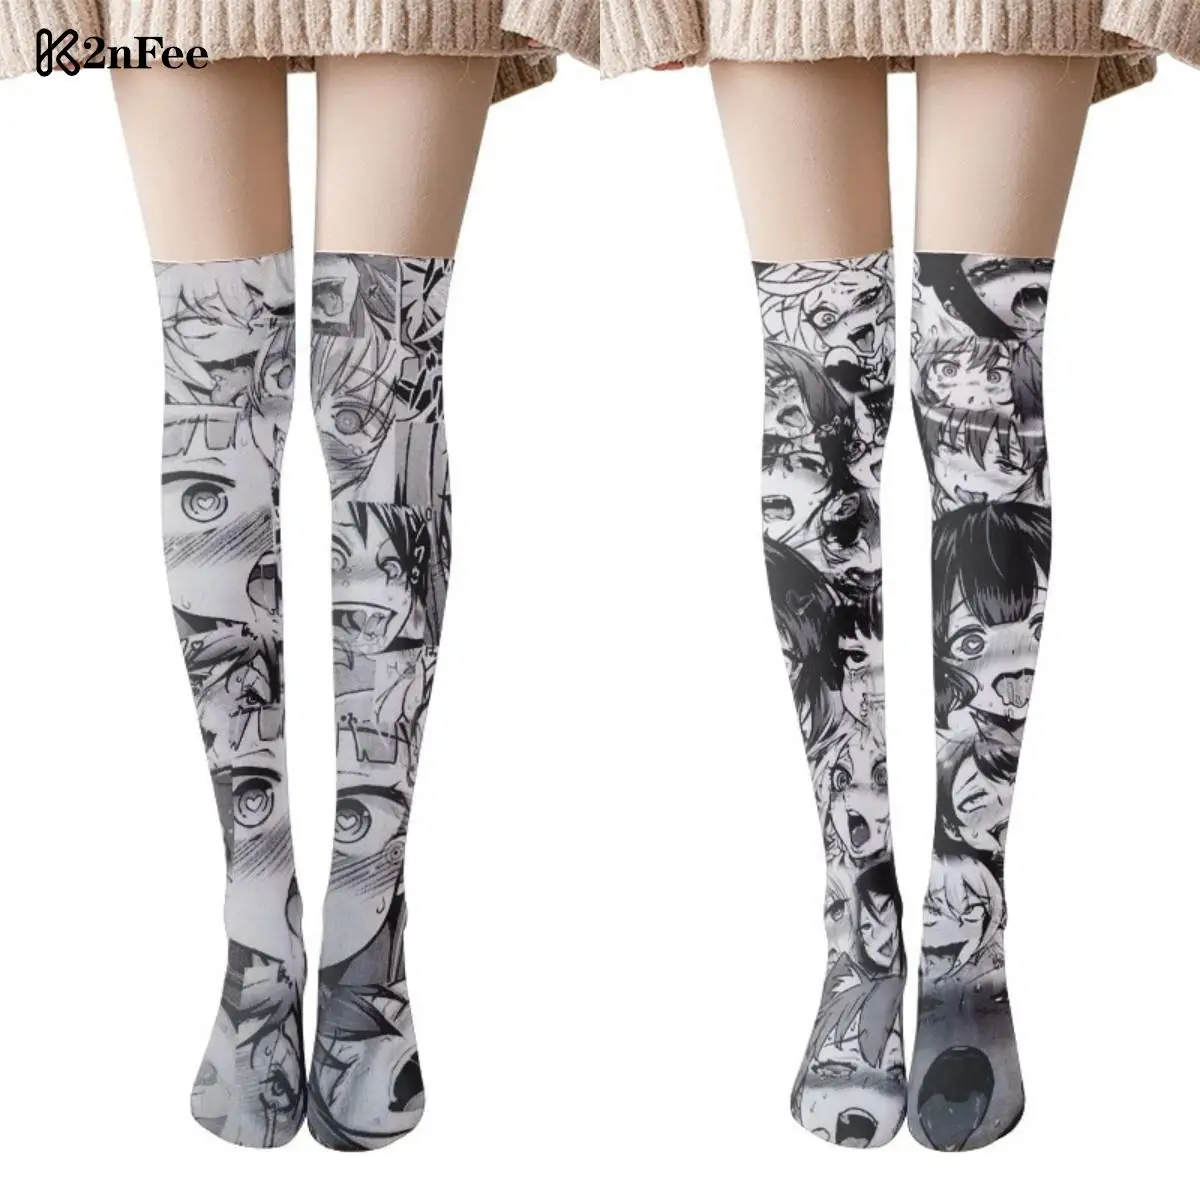 

1Pair Anime Cosplay Printed Stockings Lolita Gothic Overknee Tights Socks Long Knee Stockings Sexy Costume Women Girls Socks